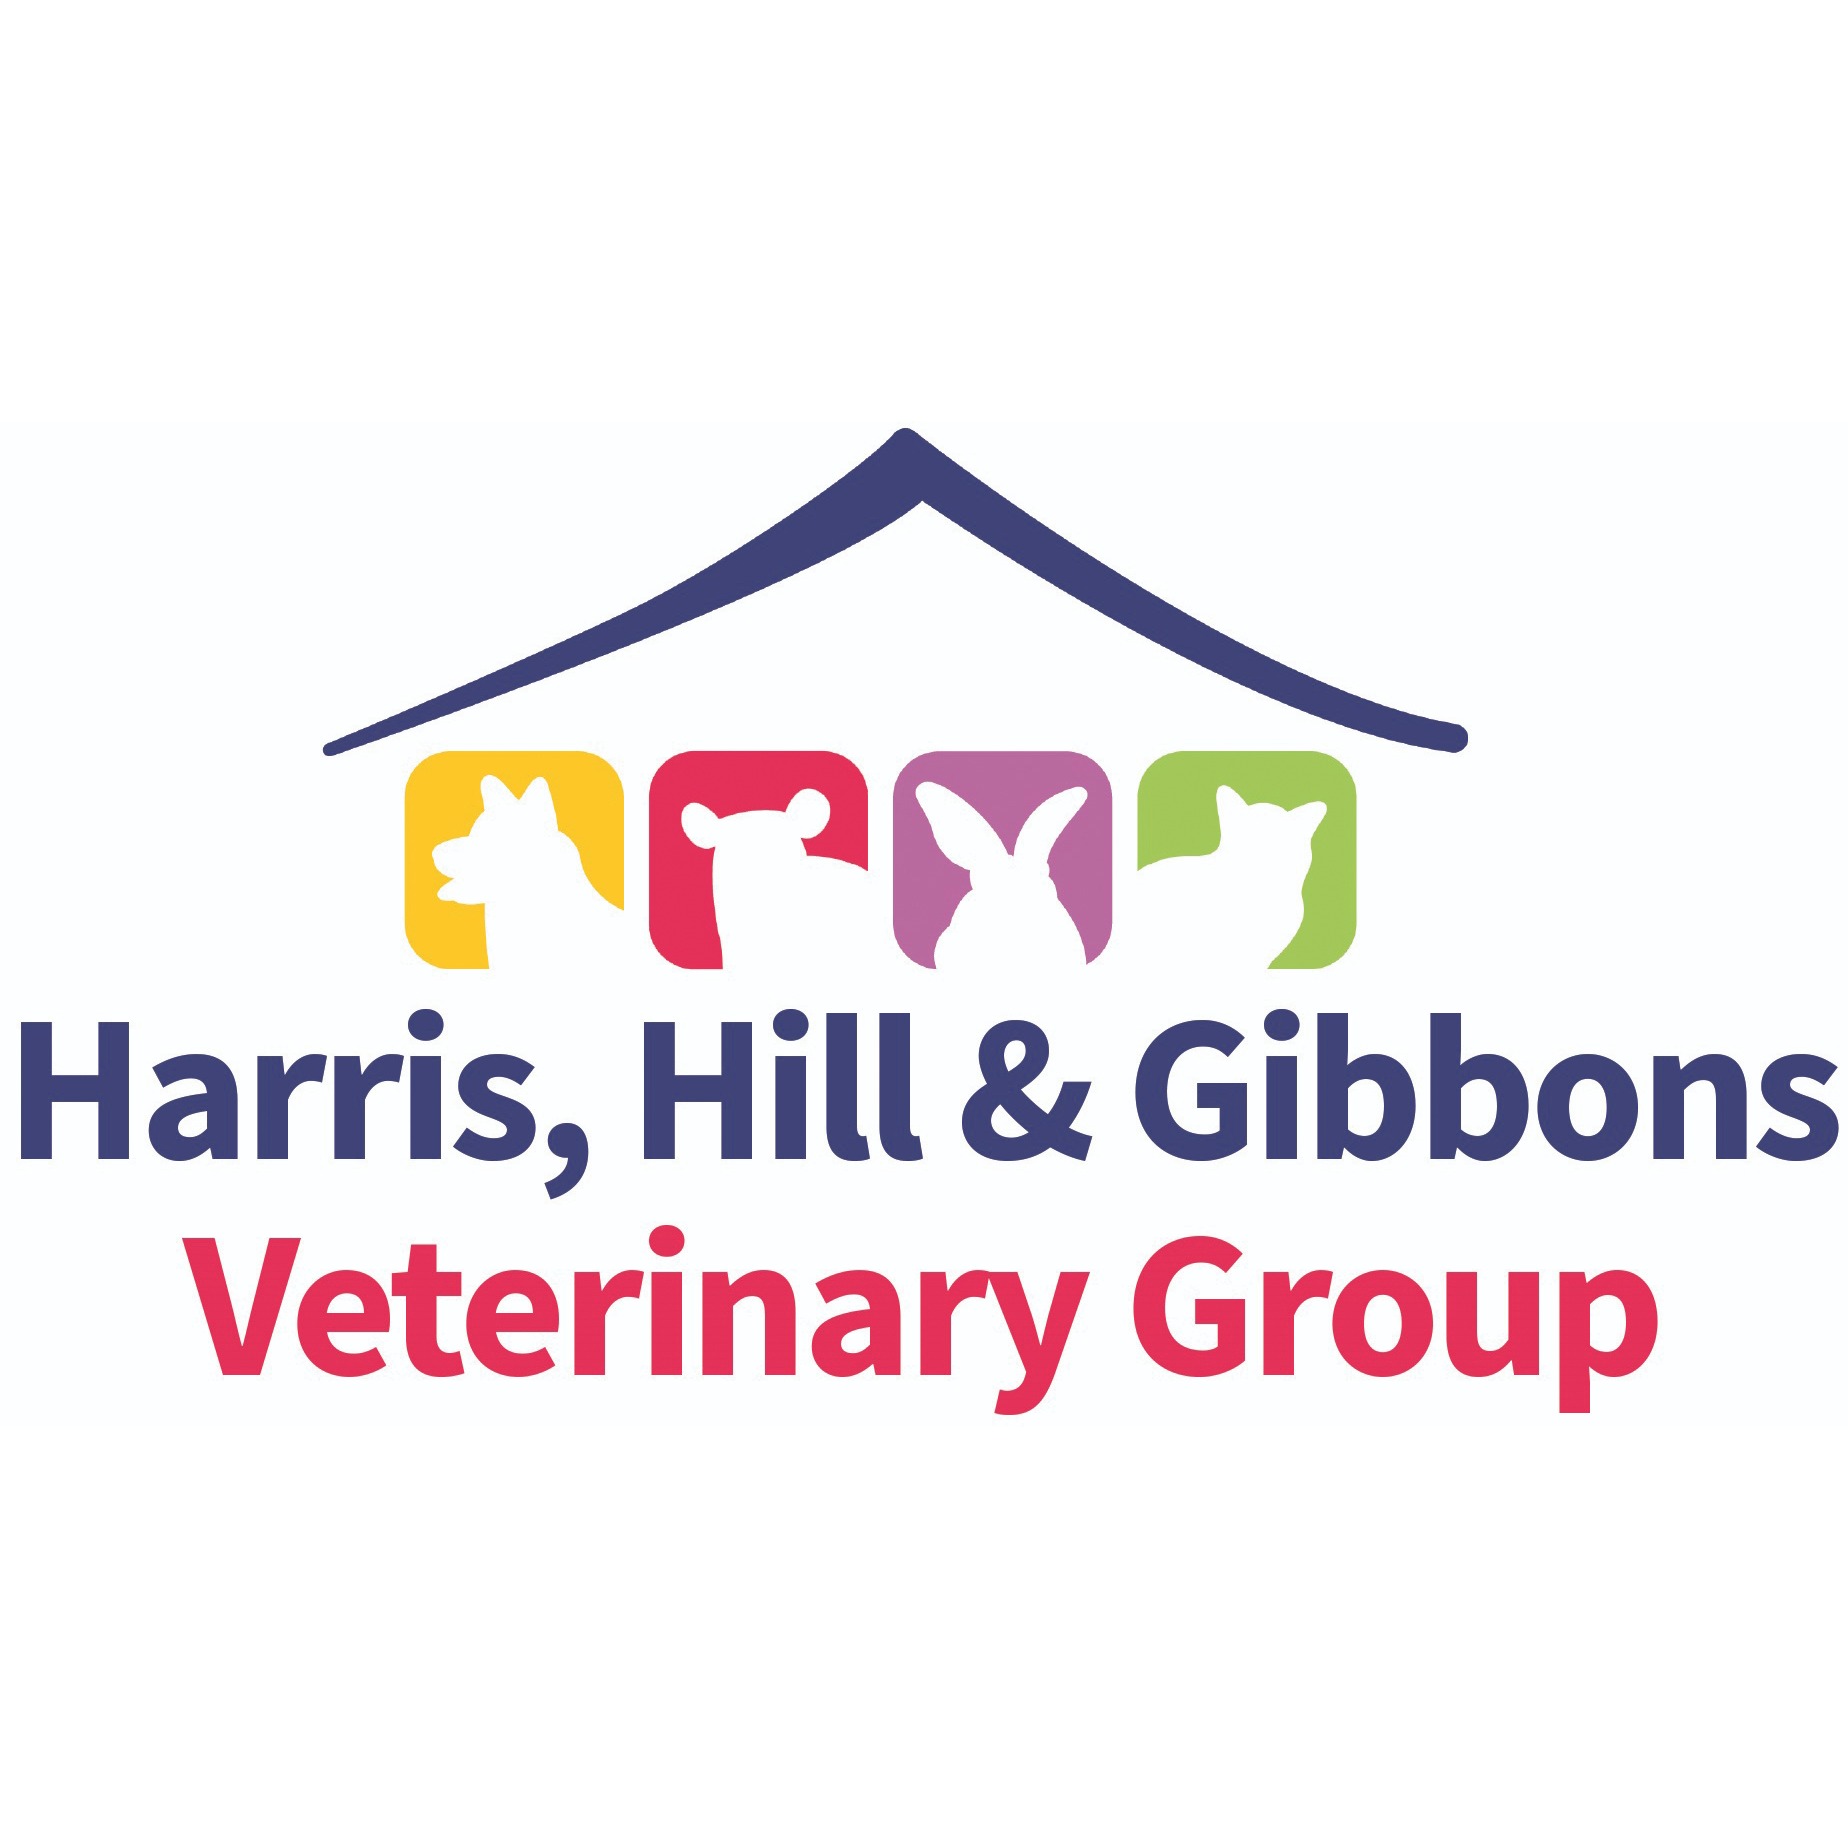 Harris, Hill & Gibbons Veterinary Group - Trowbridge - Trowbridge, Wiltshire BA14 7DG - 01225 760630 | ShowMeLocal.com